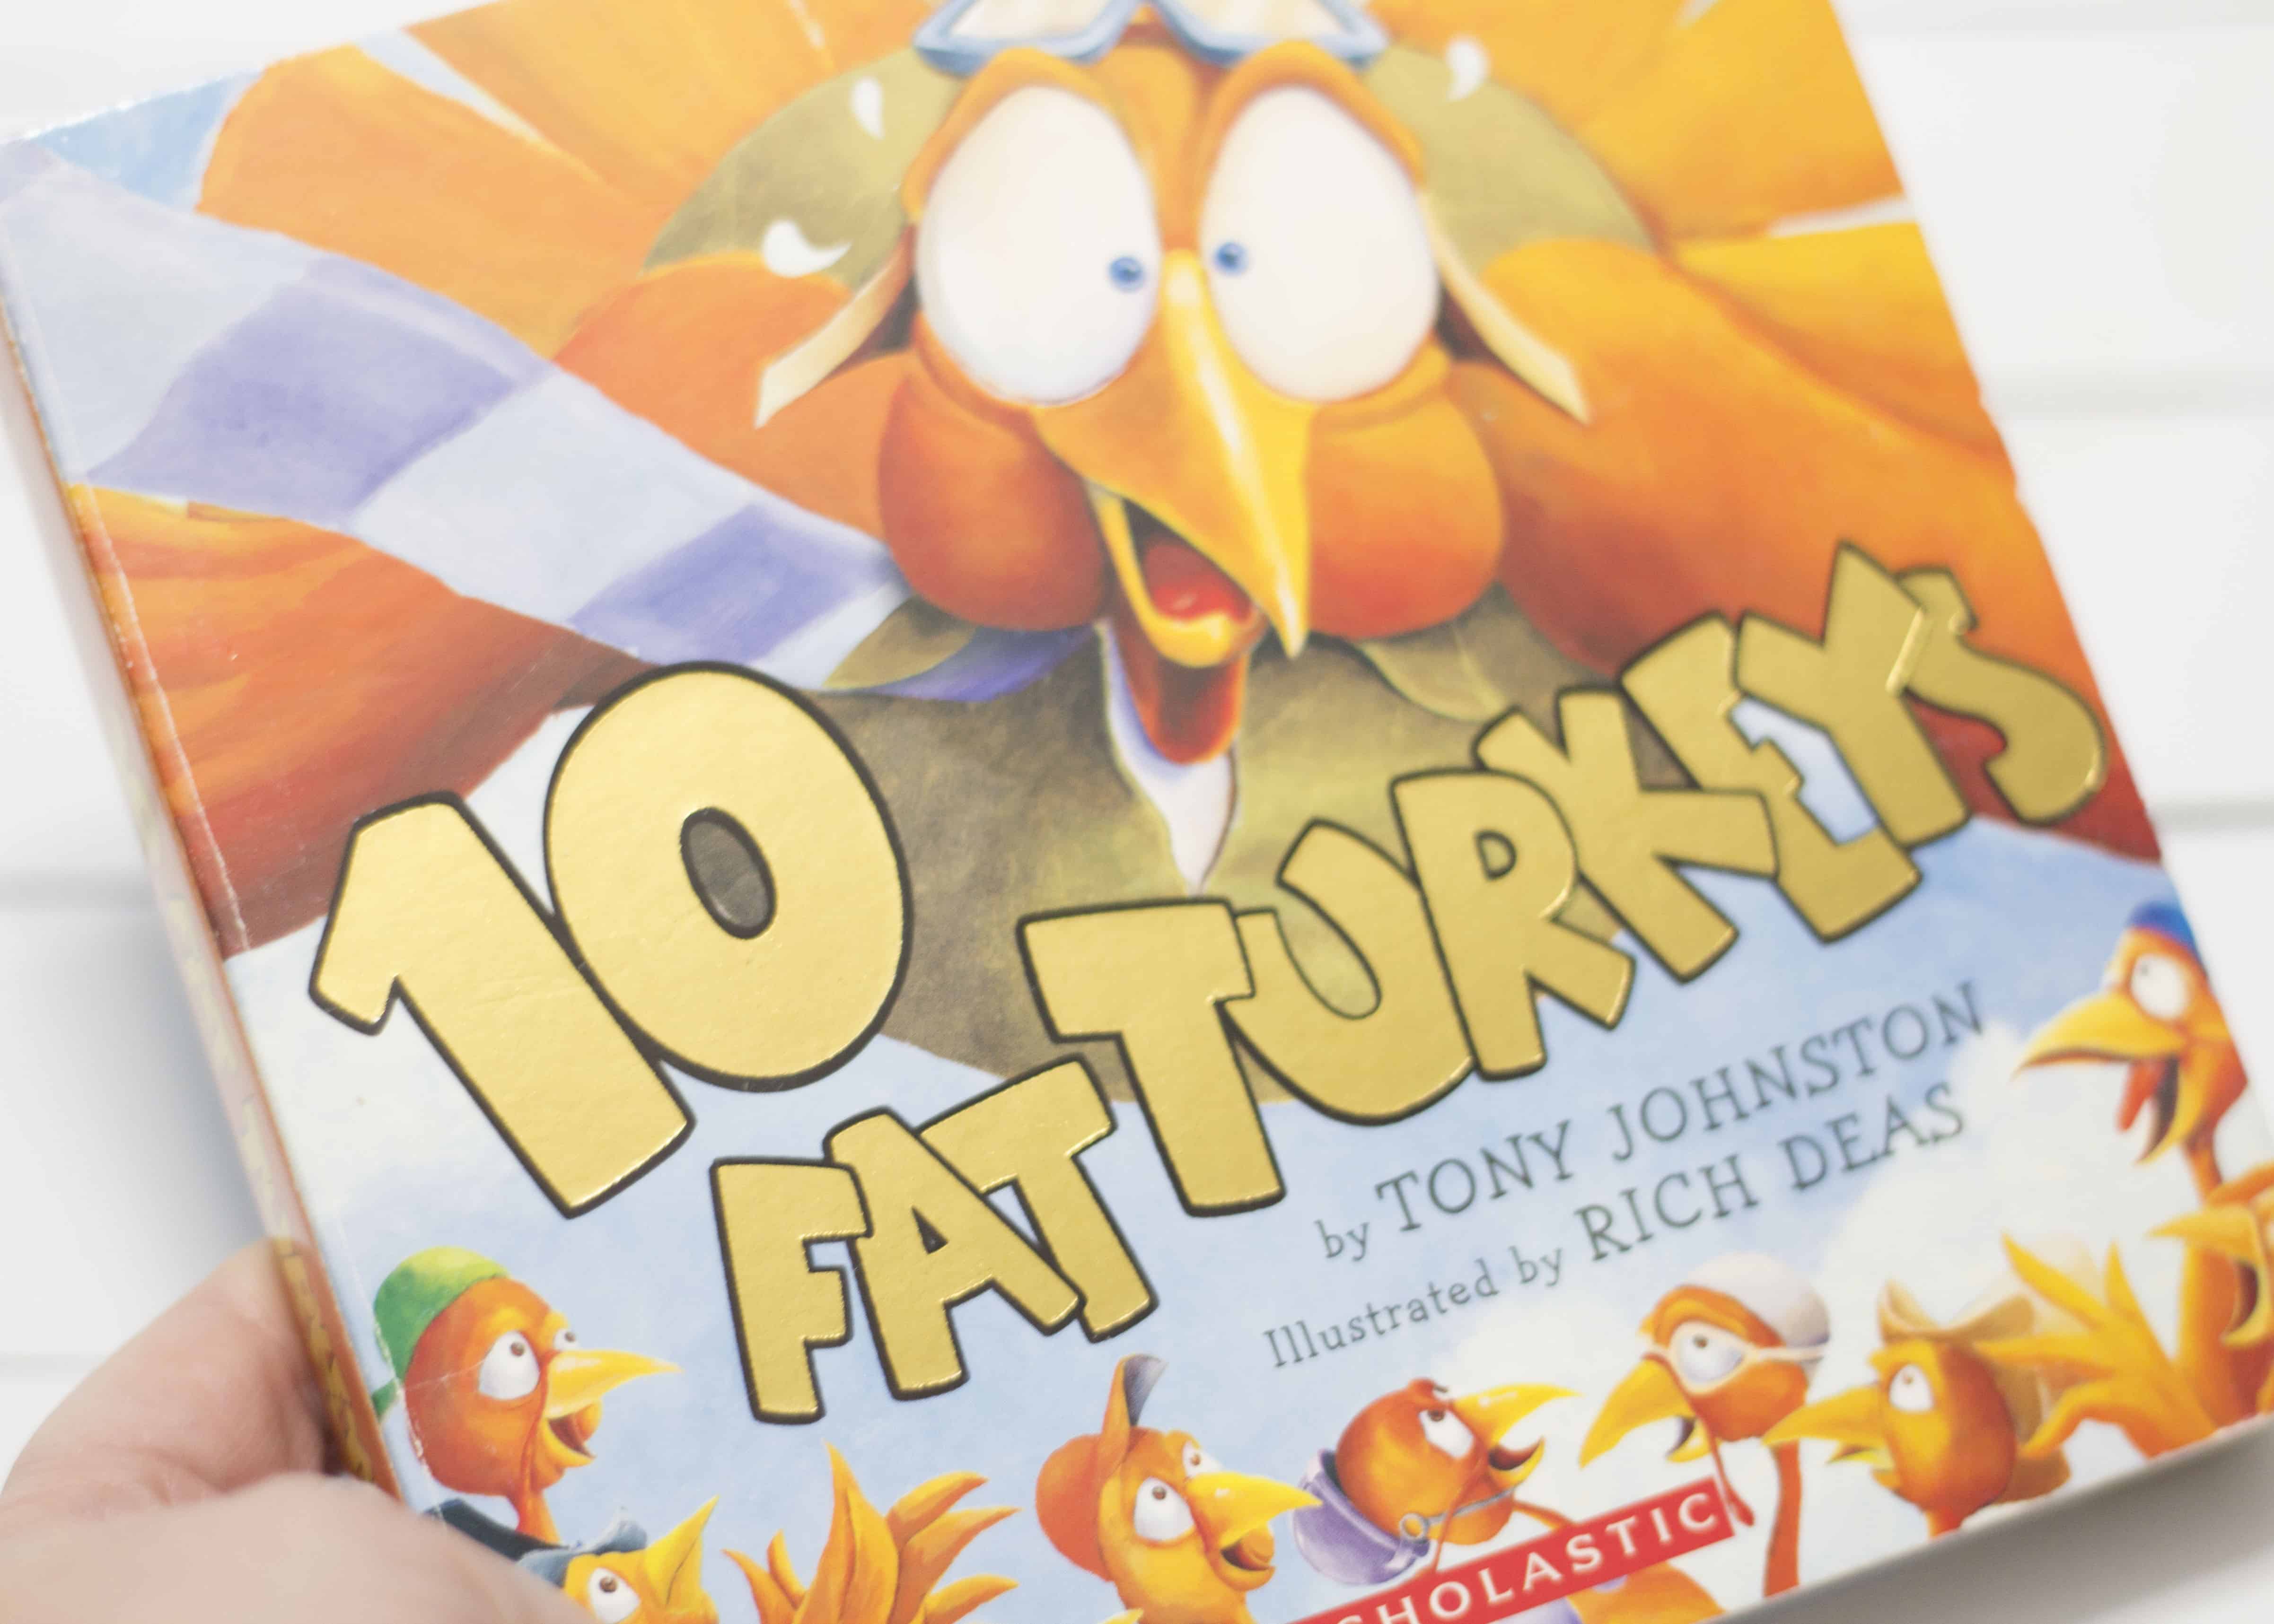 10 FAT TURKEYS PICTURE BOOK